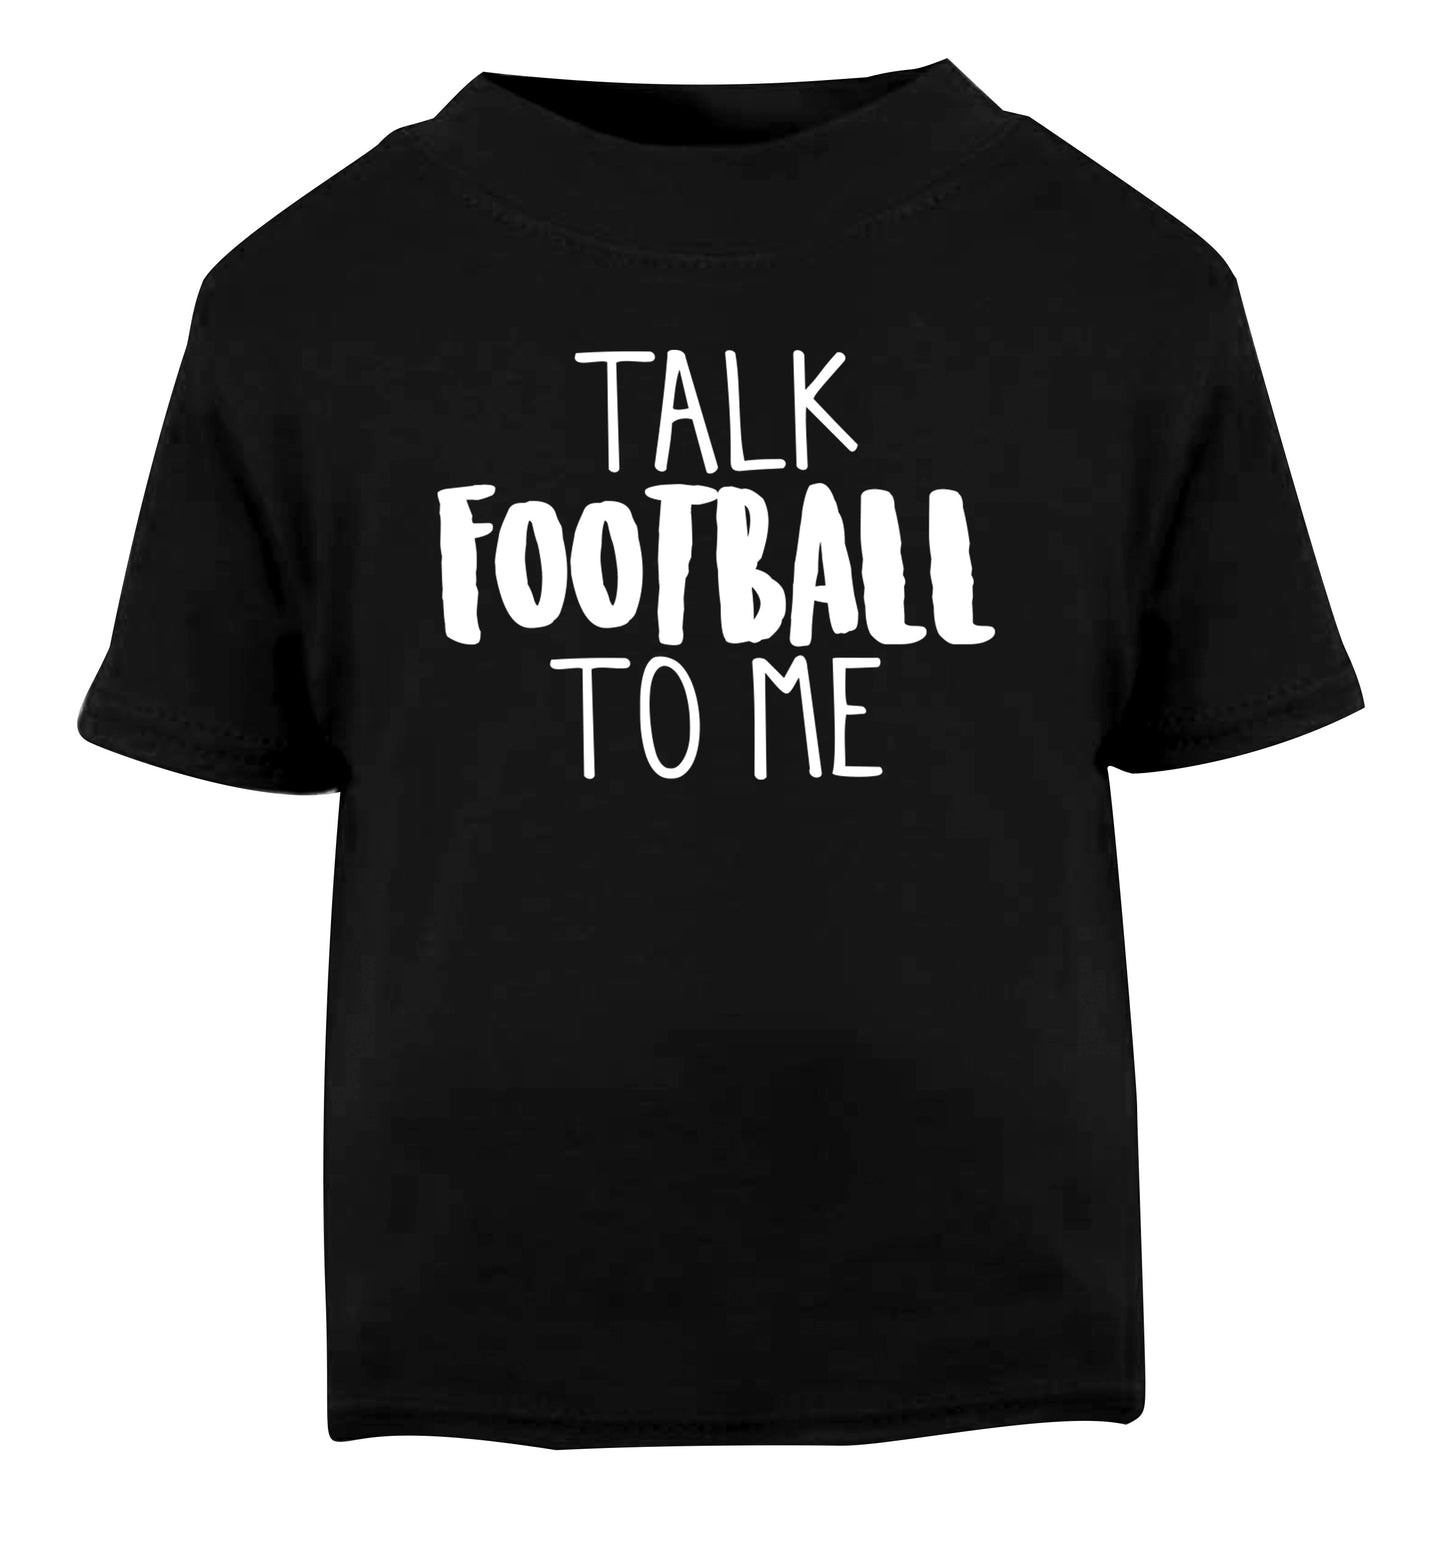 Talk football to me Black Baby Toddler Tshirt 2 years